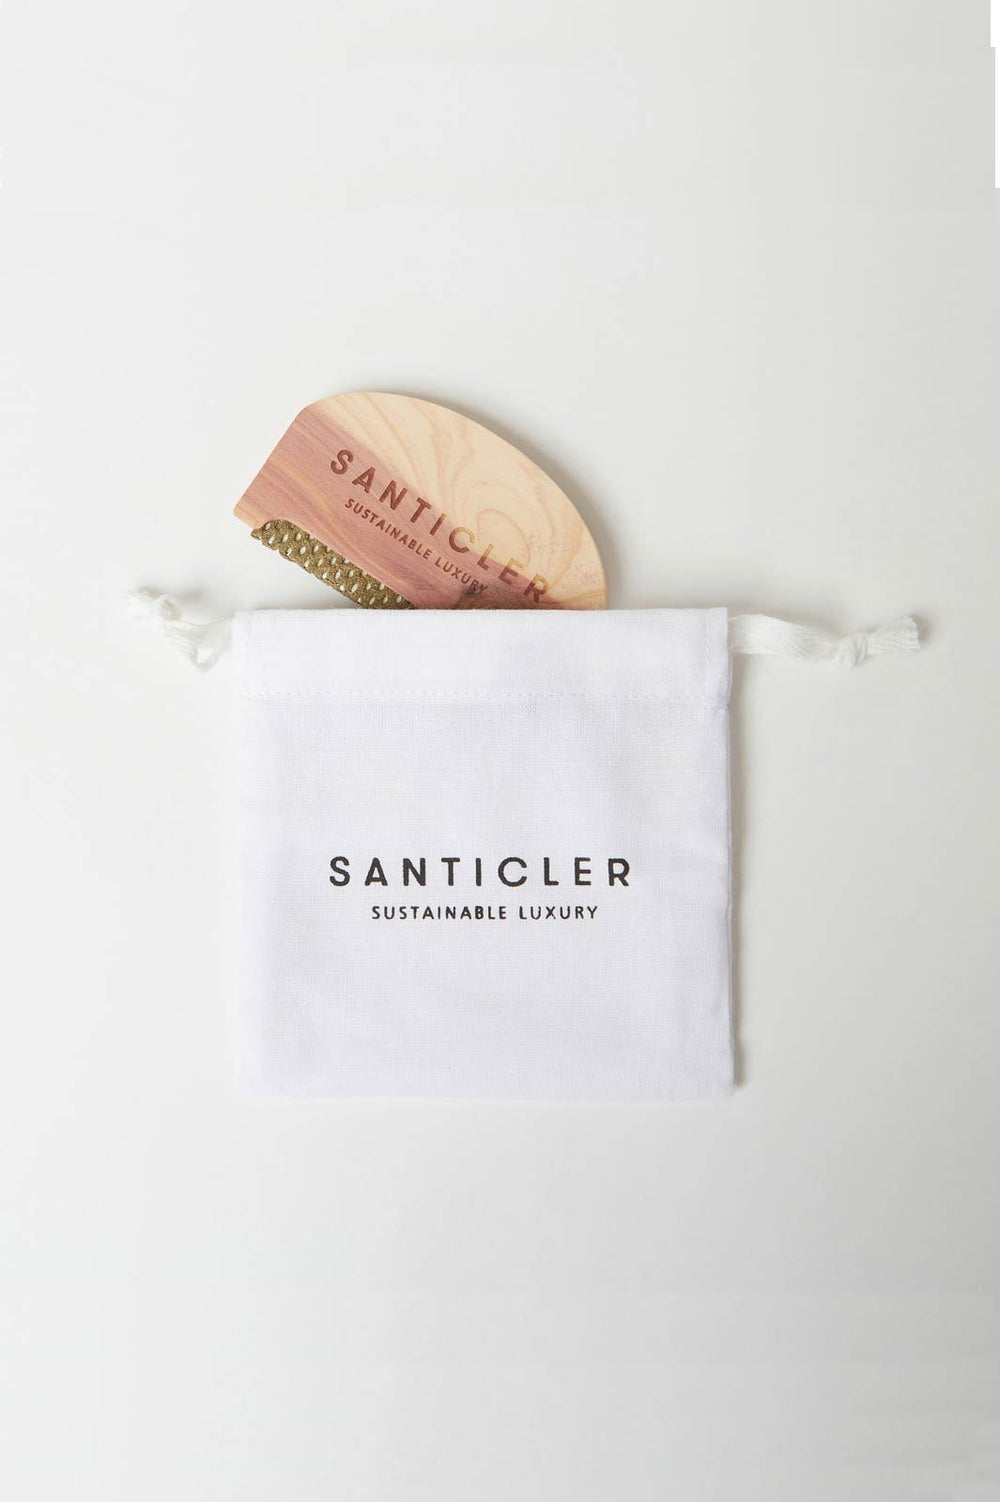 SANTICLER Cashmere Comb – Santicler